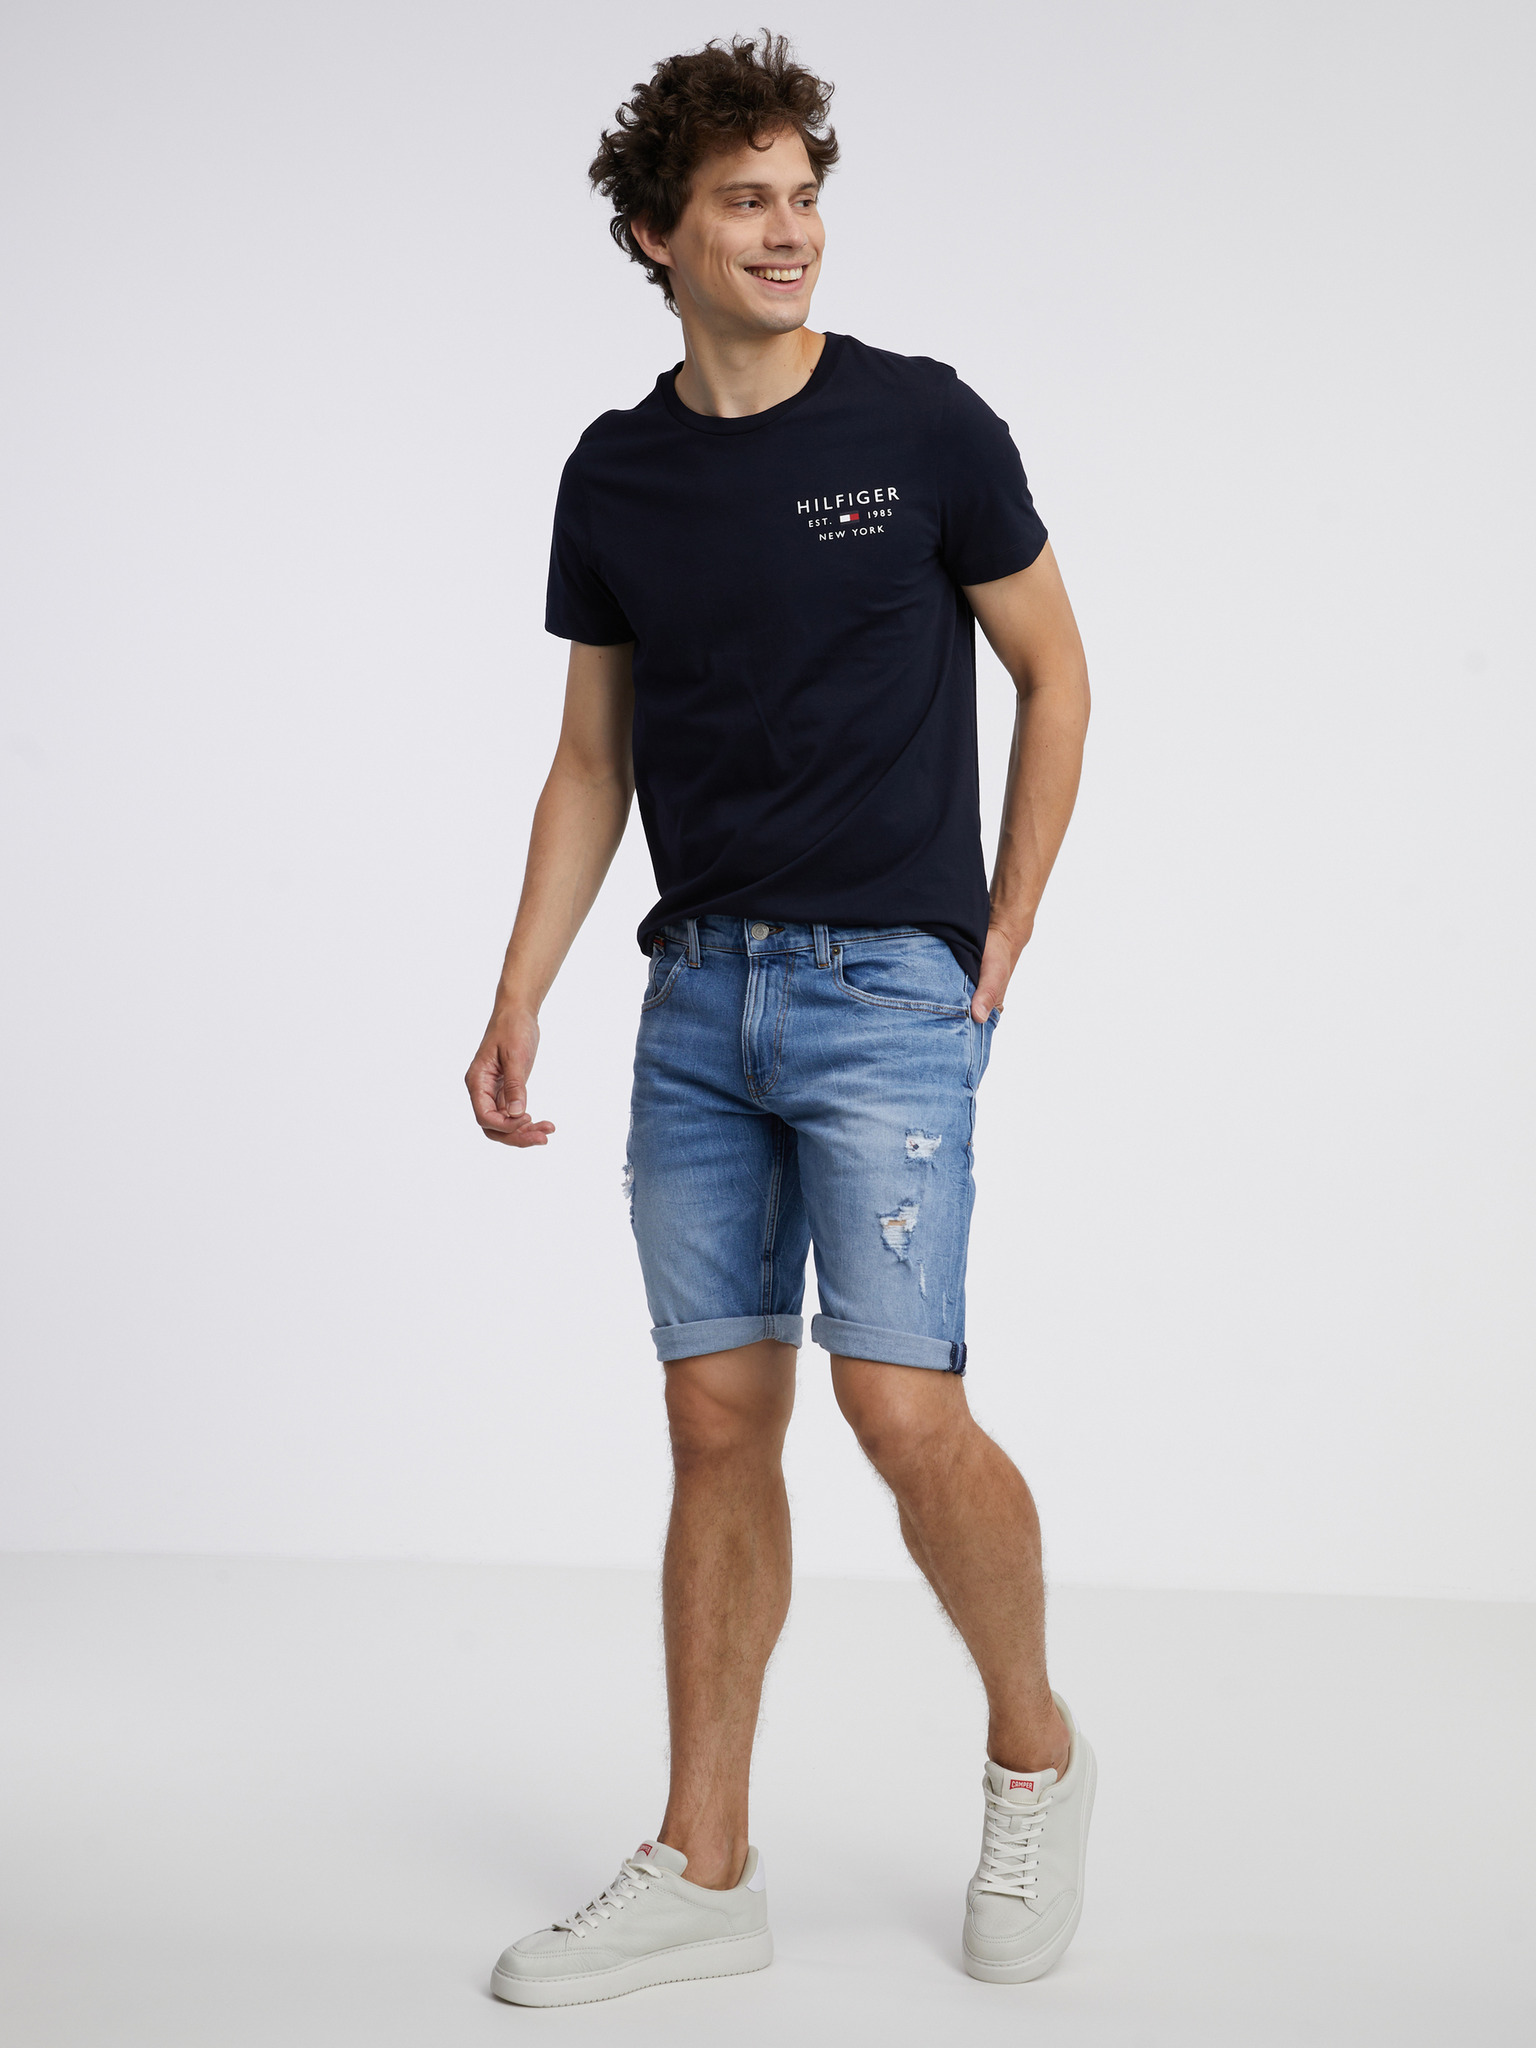 Pantalons & shorts Tommy Jeans homme